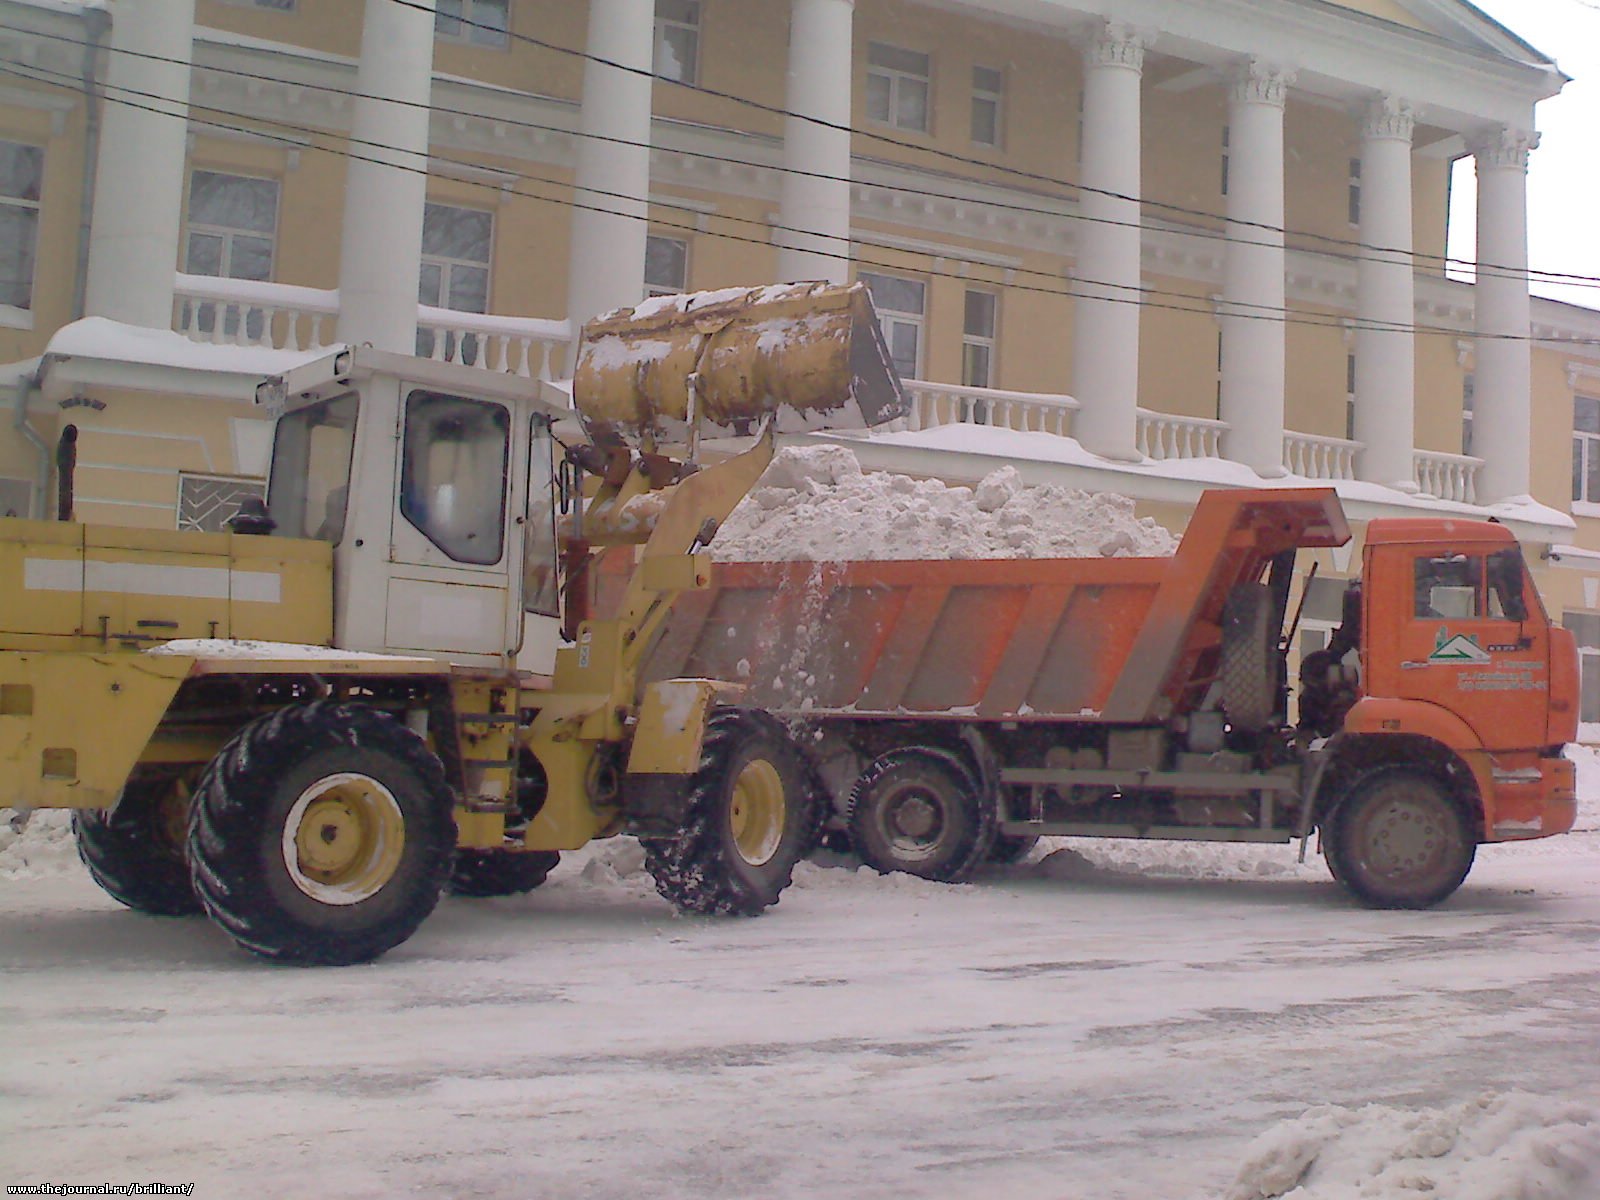 Уборка снега Санкт-Петербург